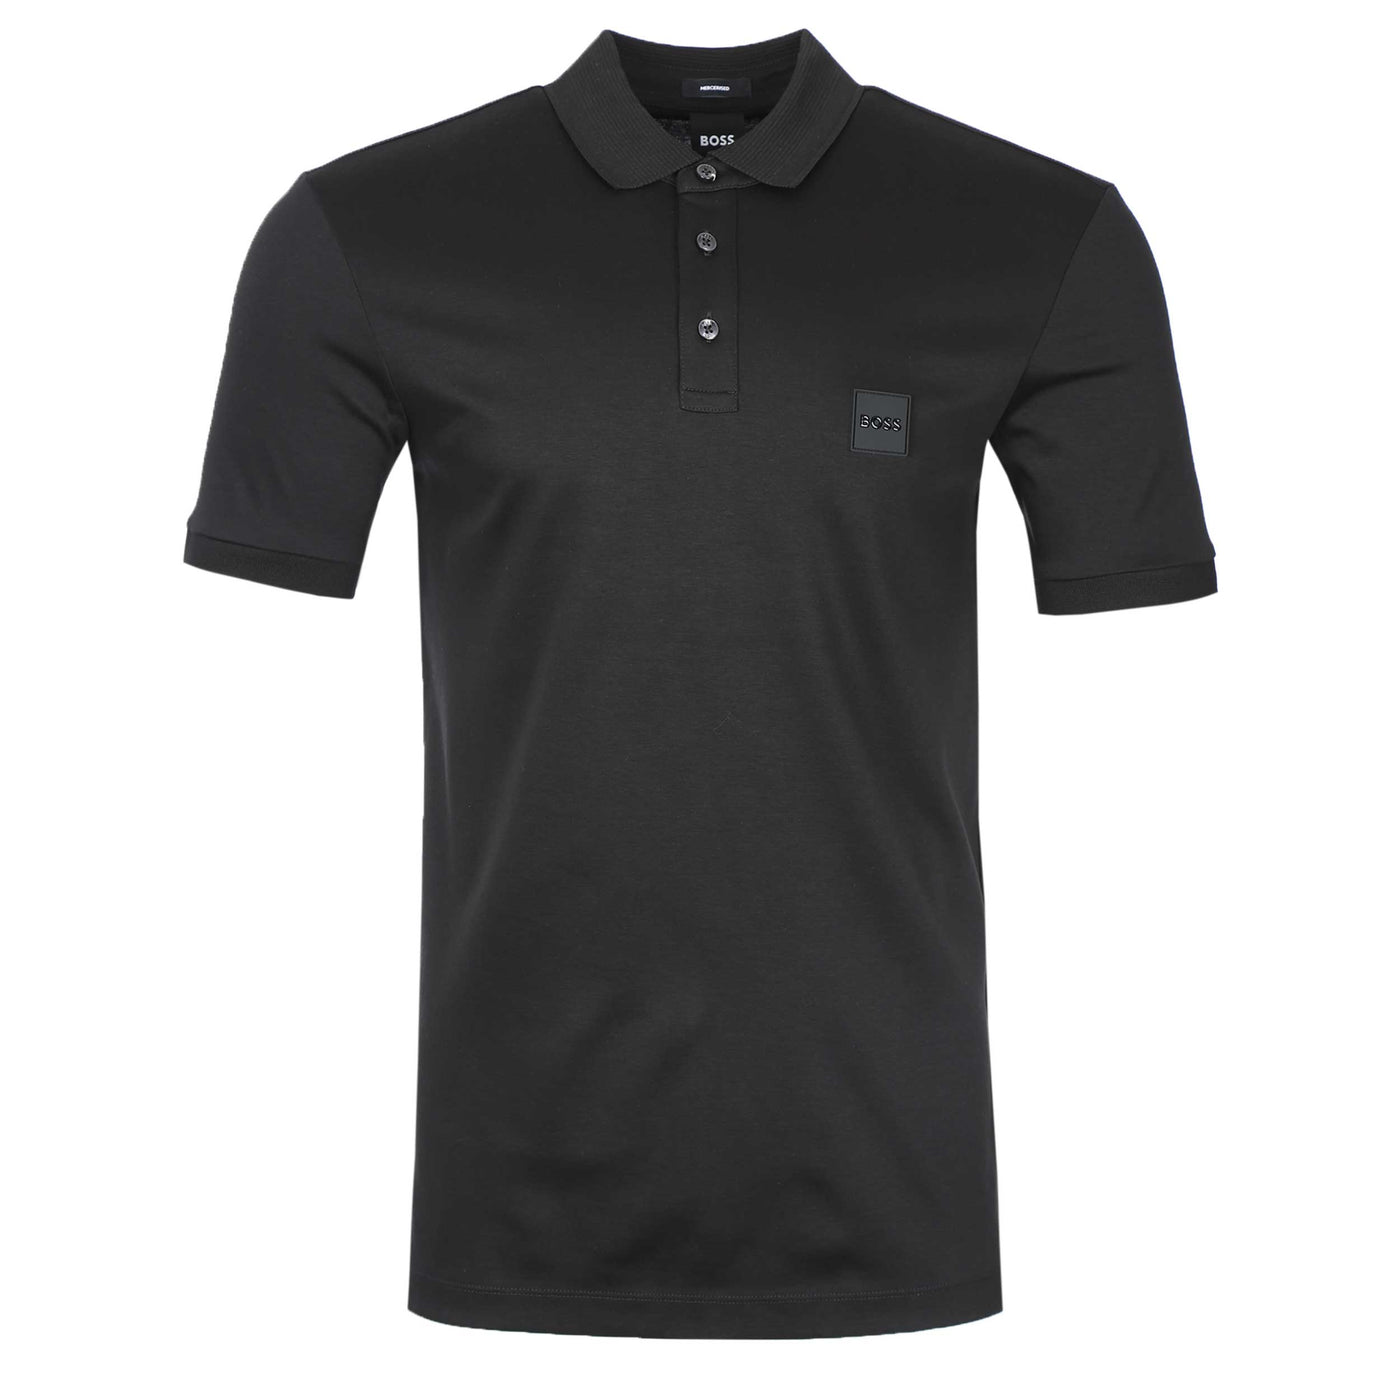 BOSS Parlay 143 Polo Shirt in Black